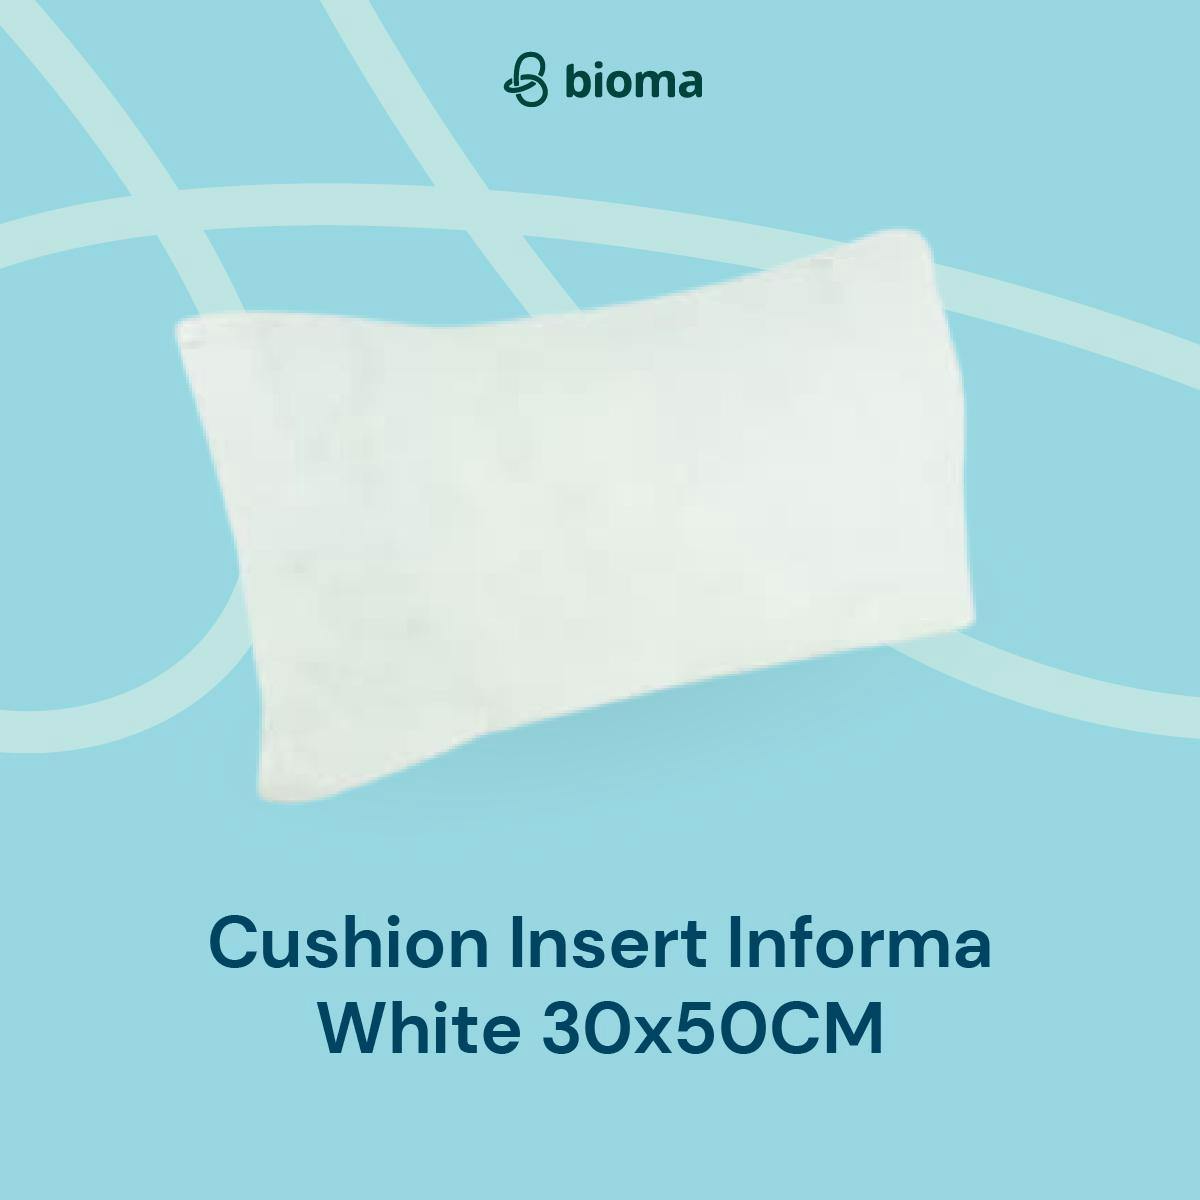 Image 385 Cushion Insert Informa White 30X50CM